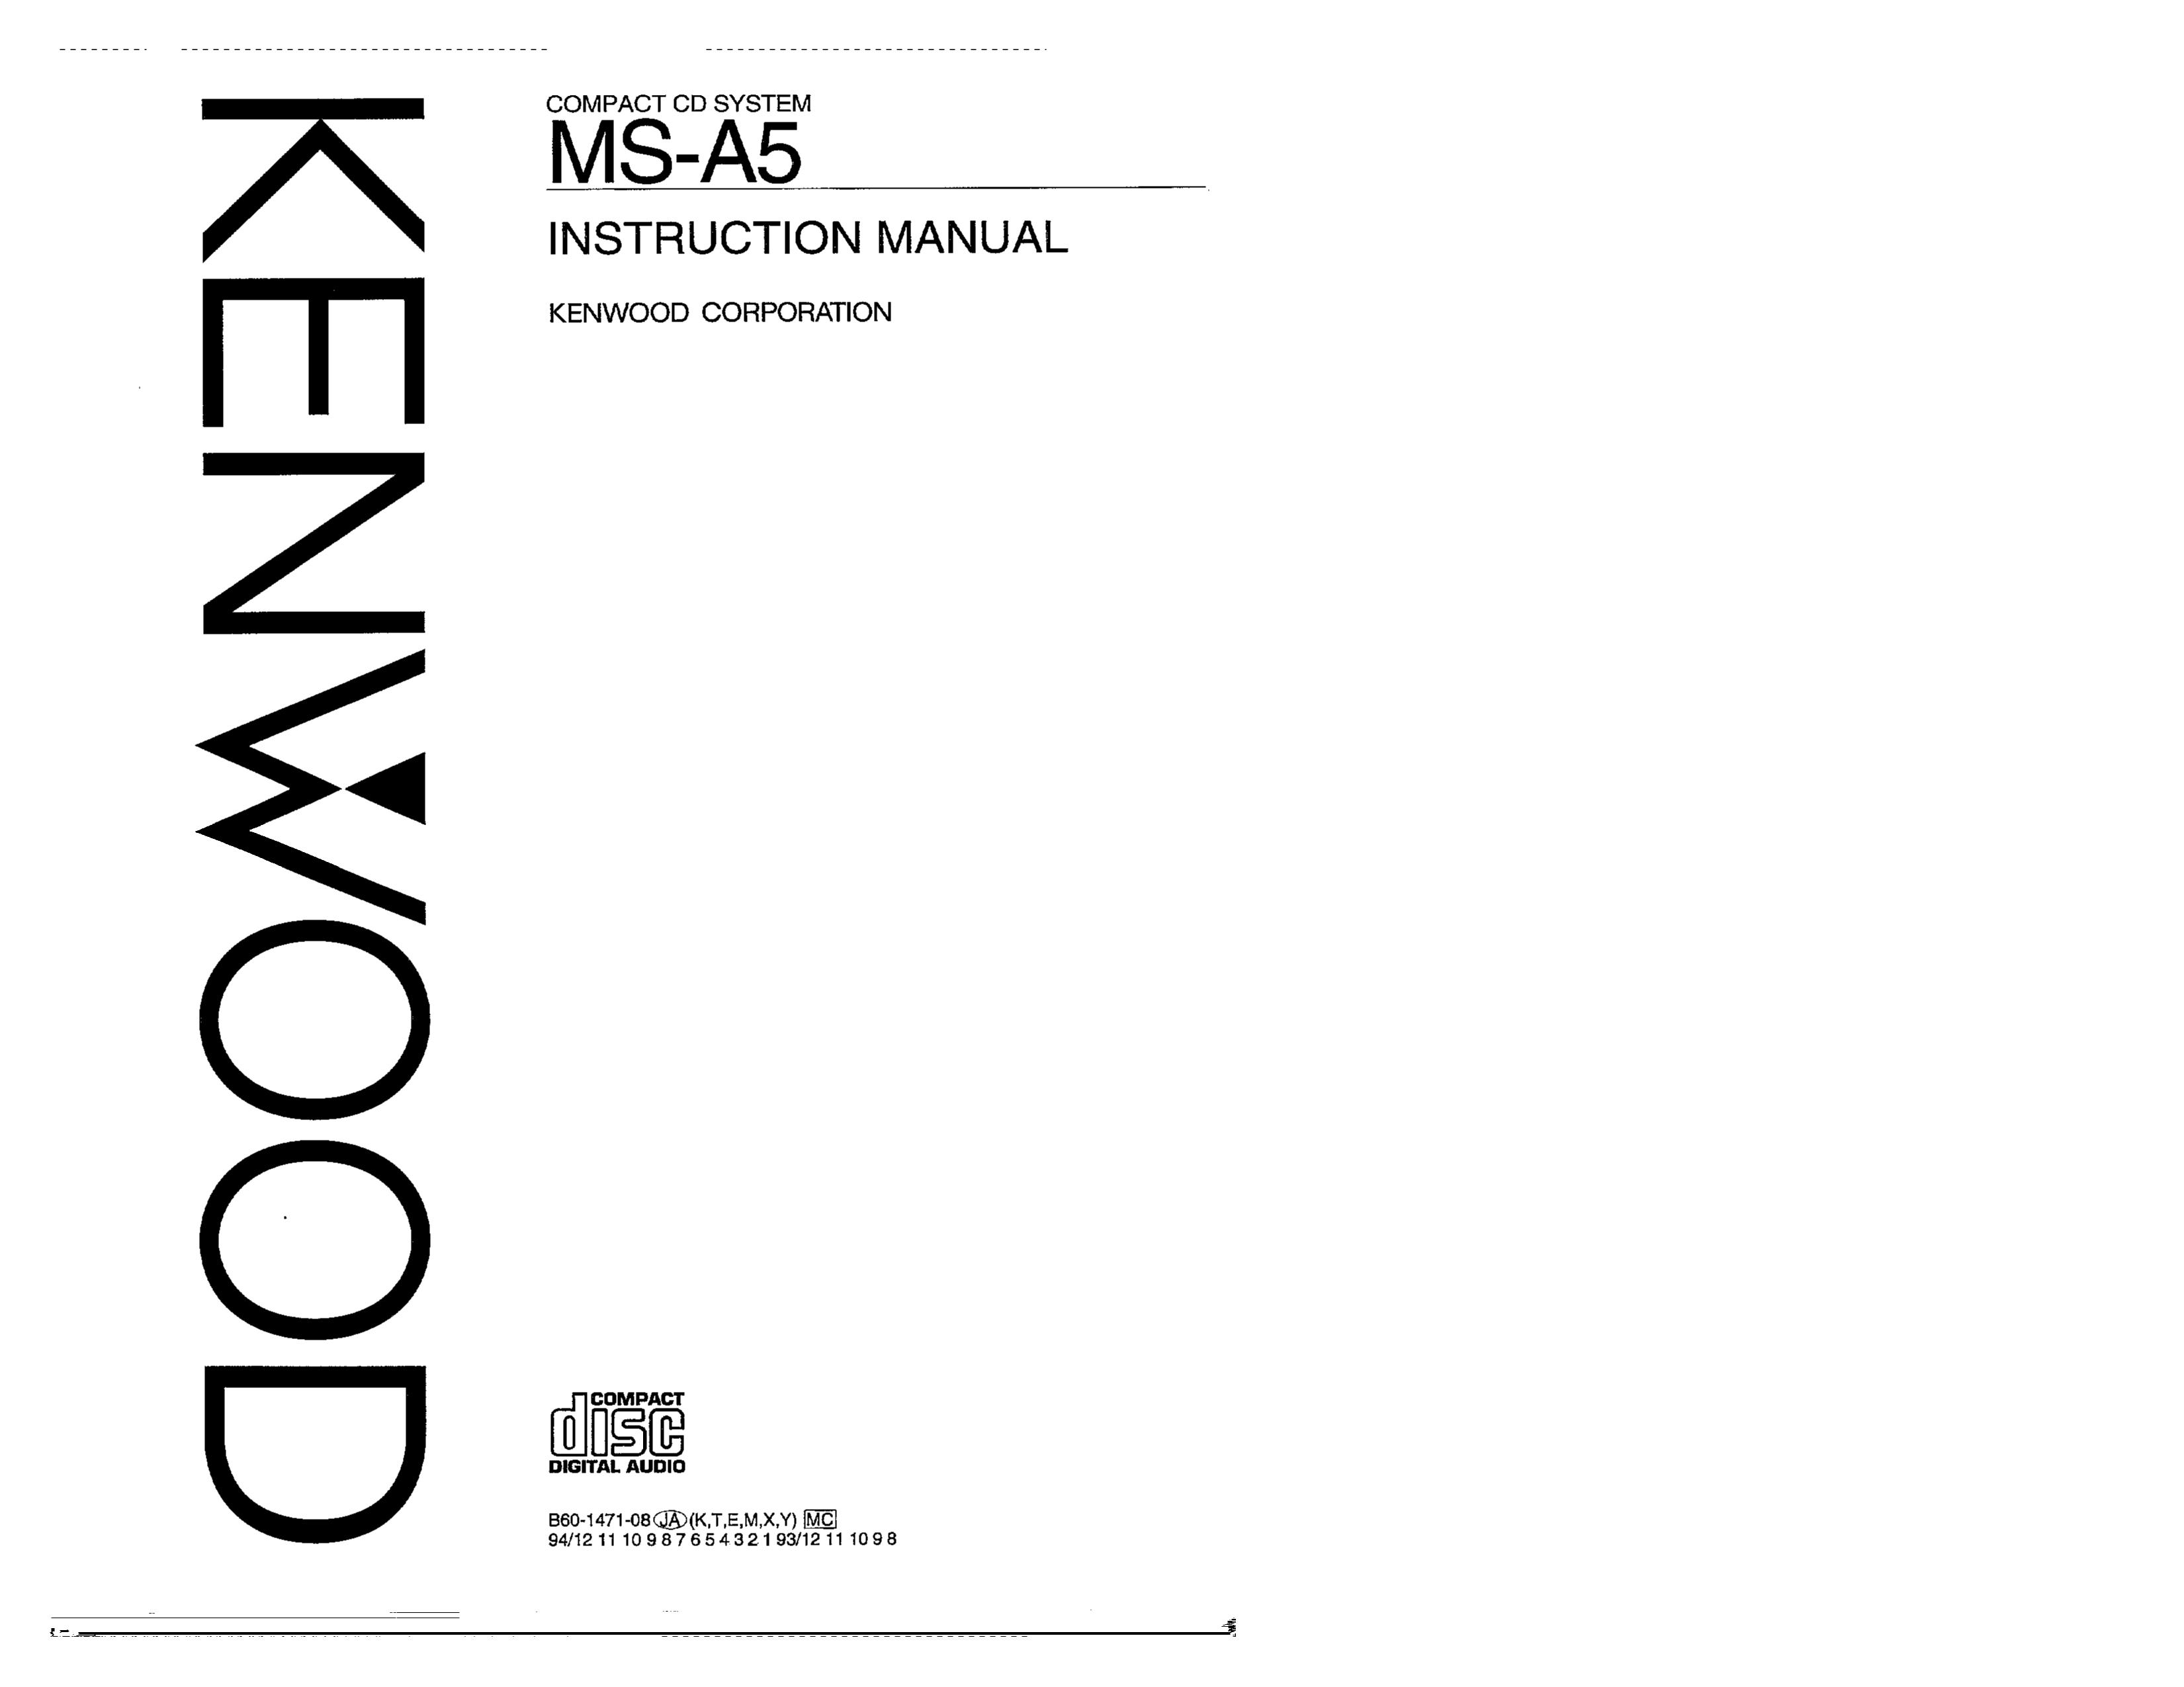 Kenwood MS-A5 Security Camera User Manual